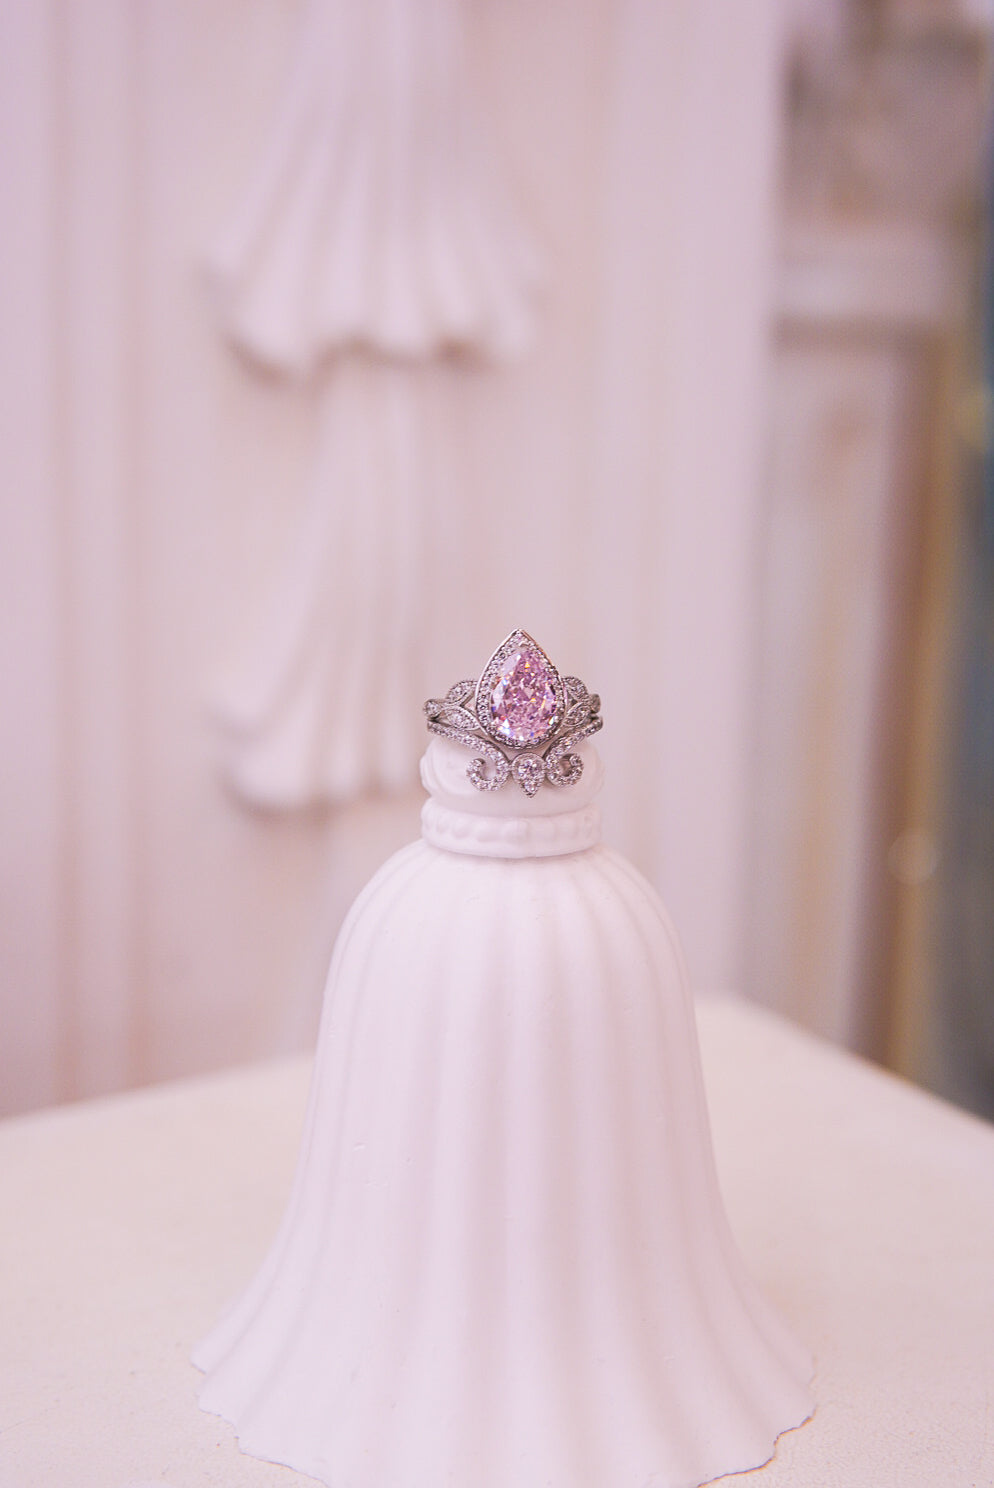 LAFIT· Royal Princess - Gift Set 皇族公主粉紅珠寶首飾套組